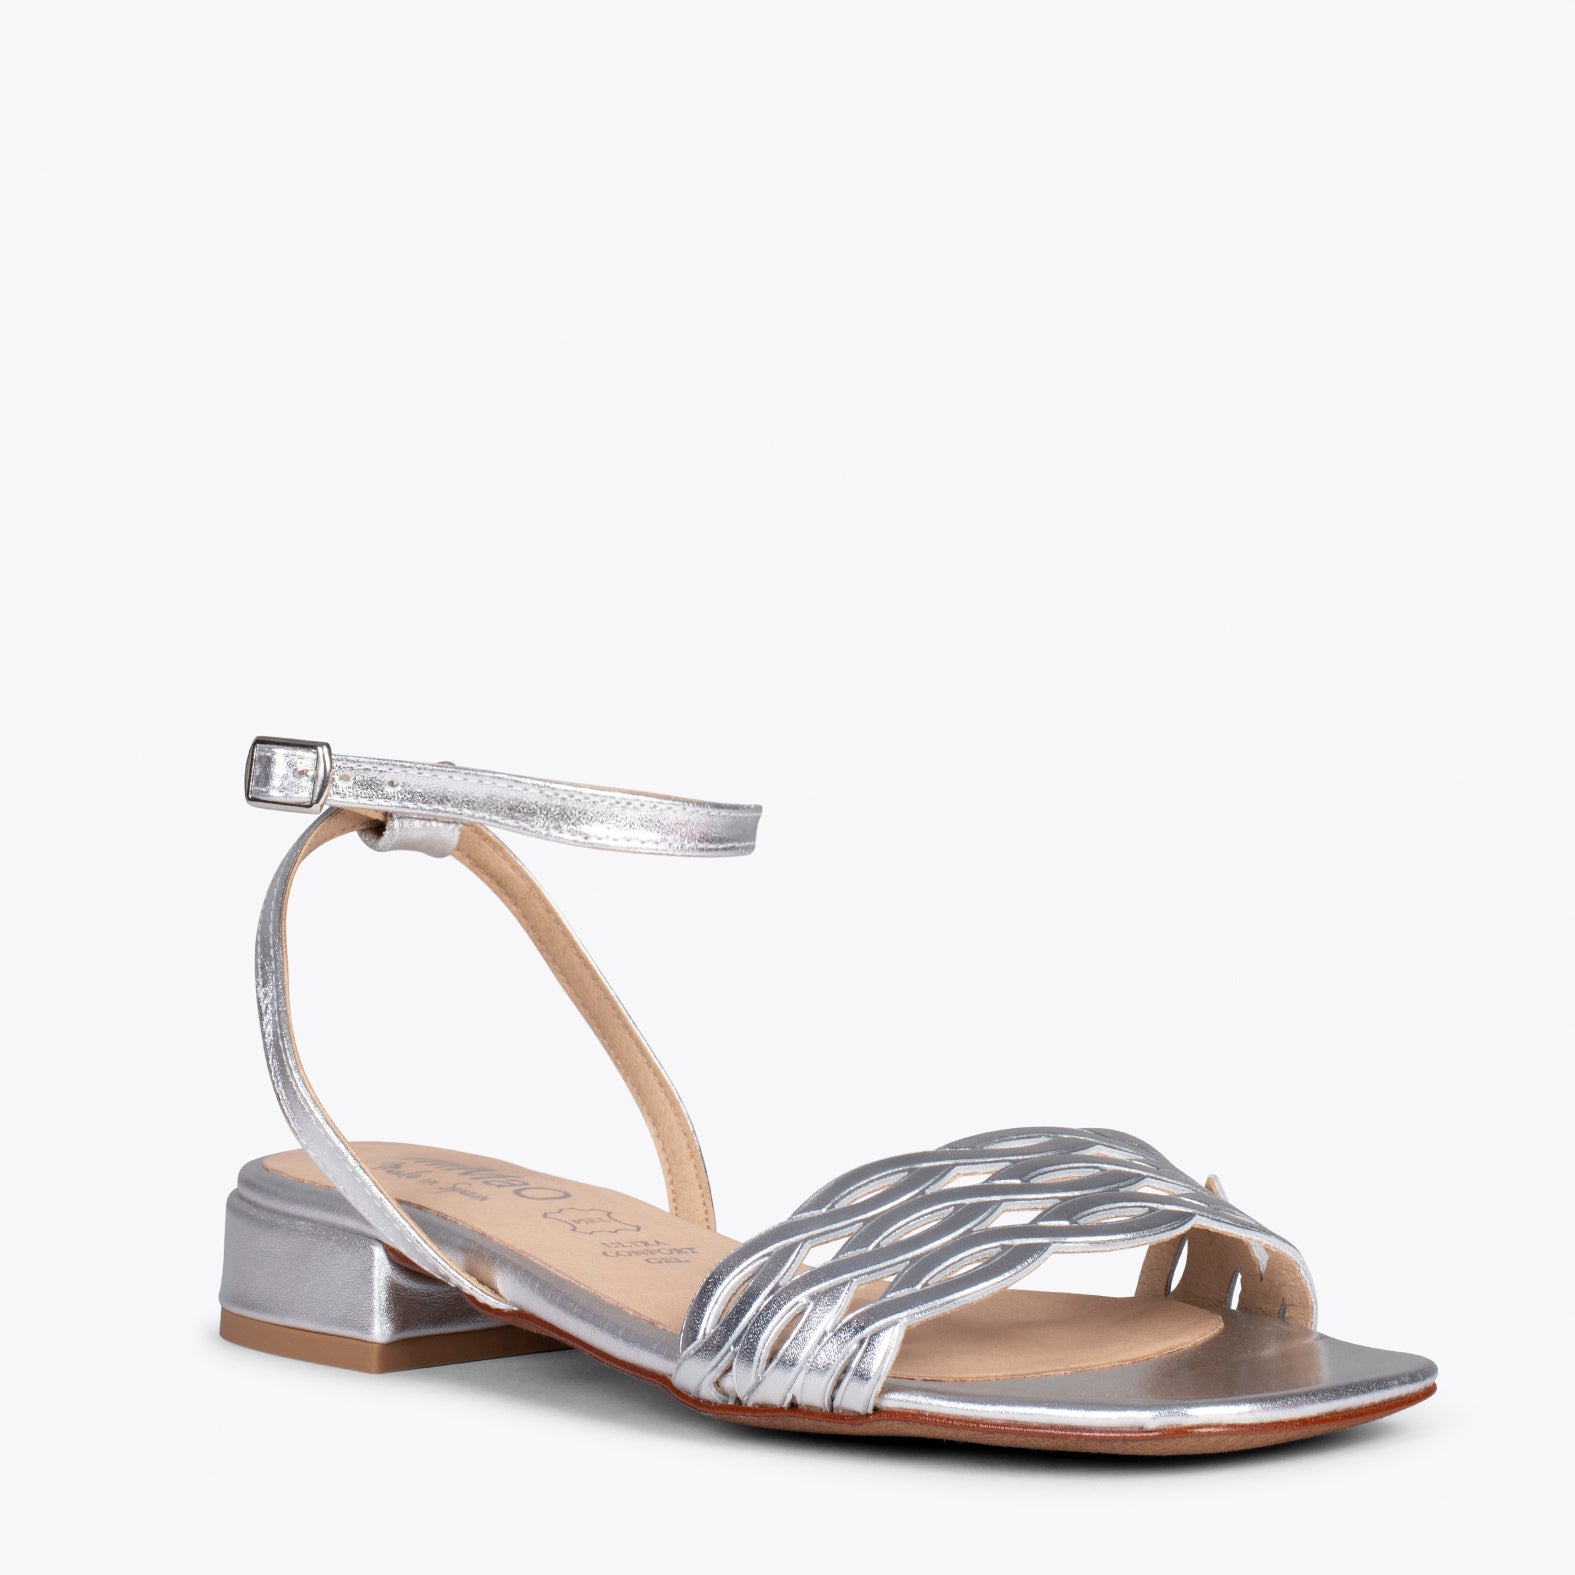 SOFIA – SILVER flat sandals